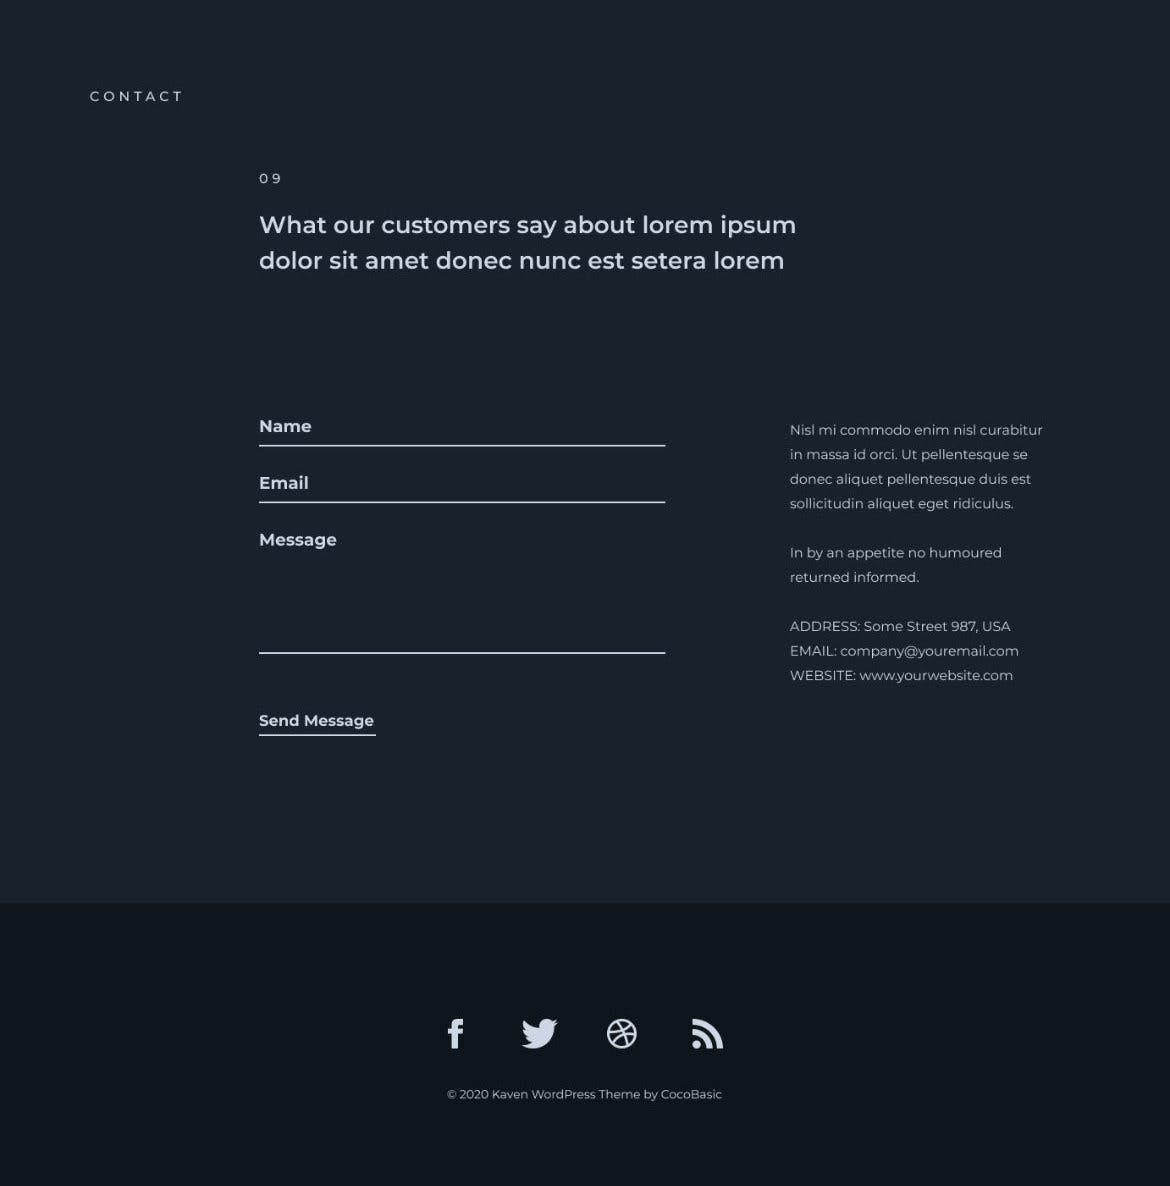 初创公司网站单页设计Figma模板 Kaven – One Page Figma Template